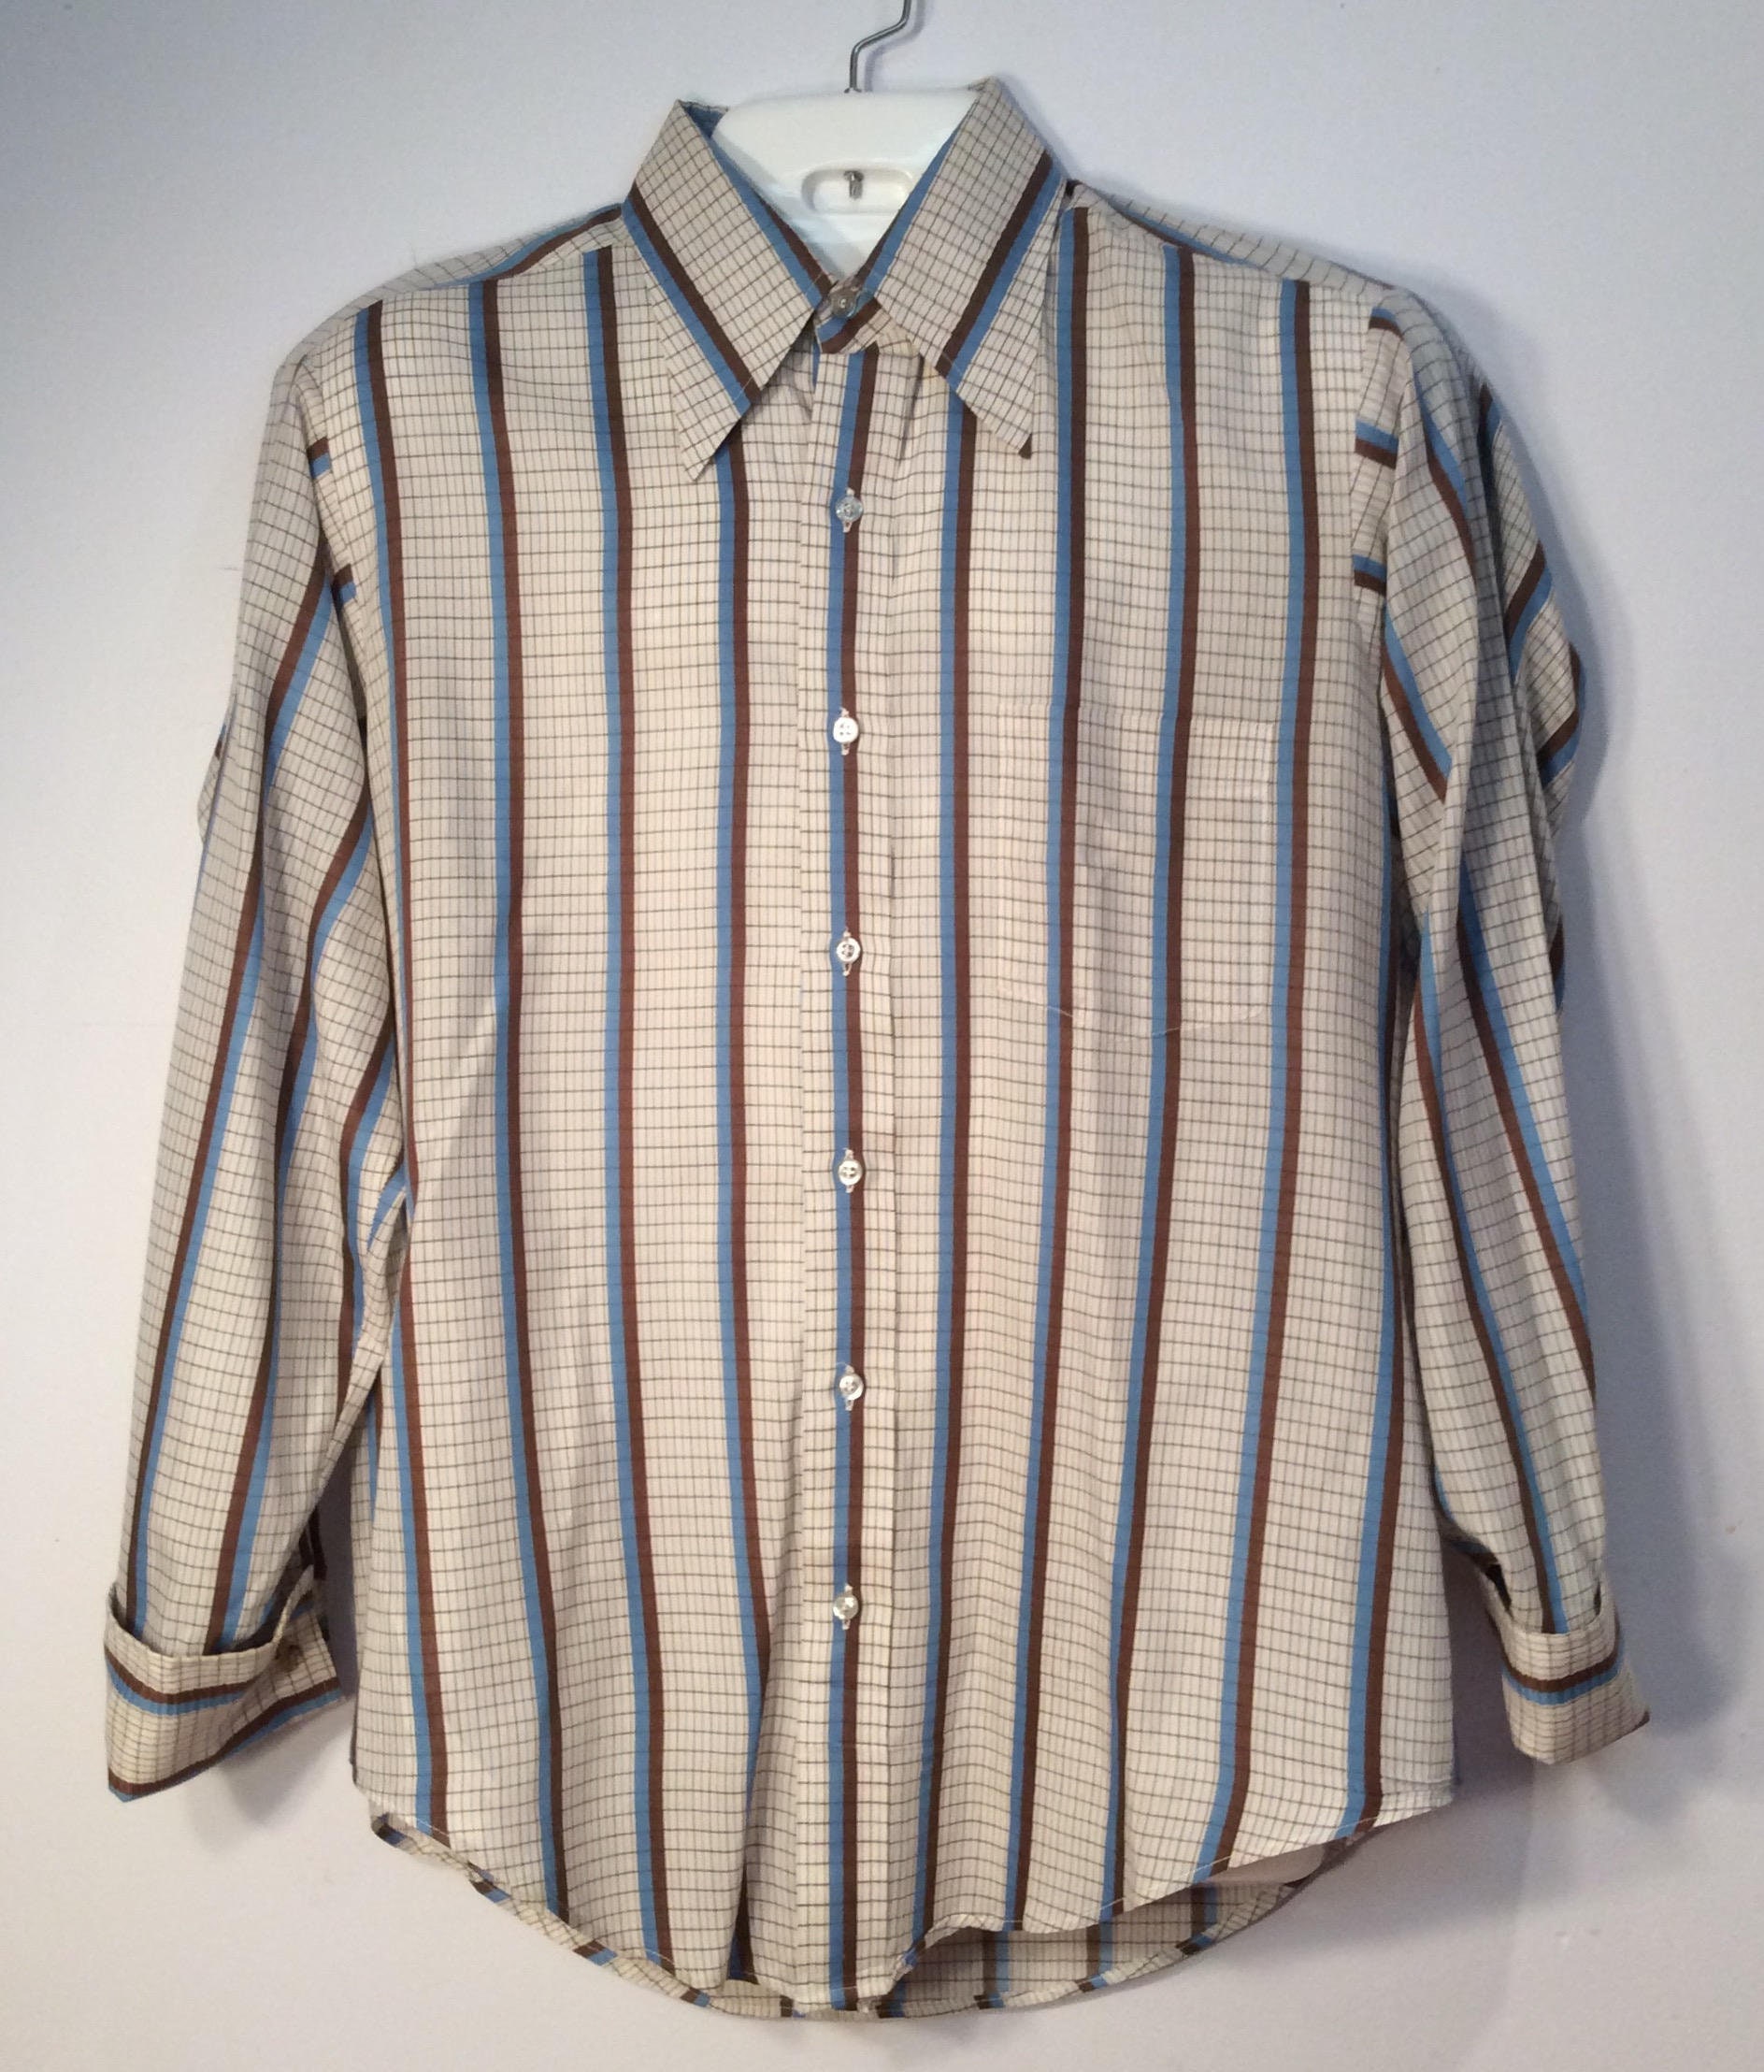 Futura by Van Heusen 1970s vintage mens shirt long sleeve | Etsy